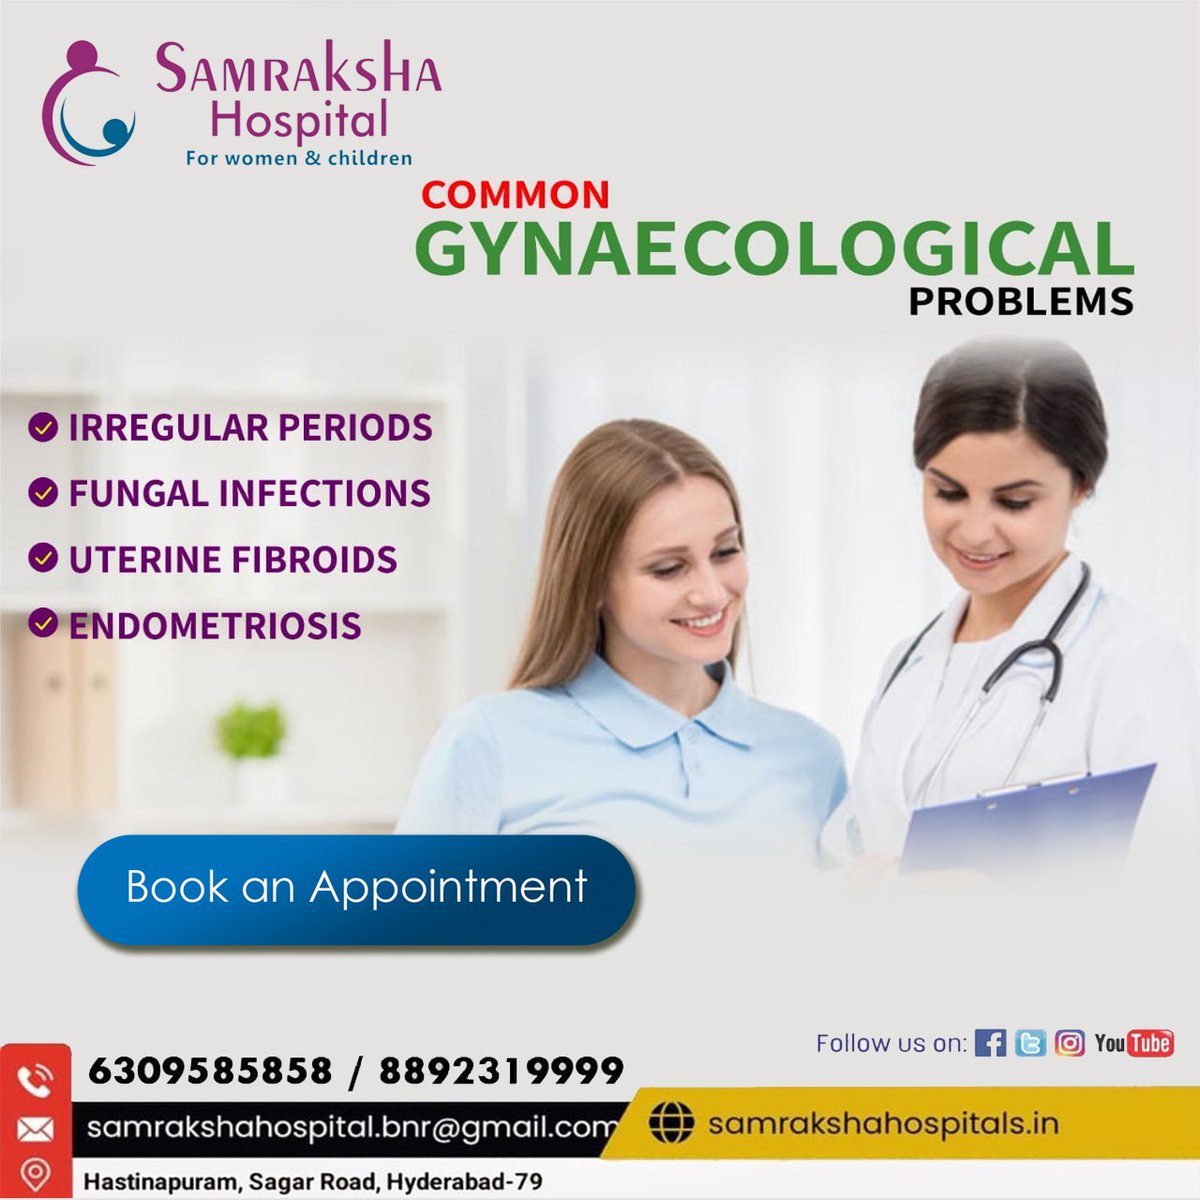 #samraksha #hospital #WomensHealth #womensafety #gynocologist #gynocology #gynocologyproblems #fungaltreatment #infectionprevention